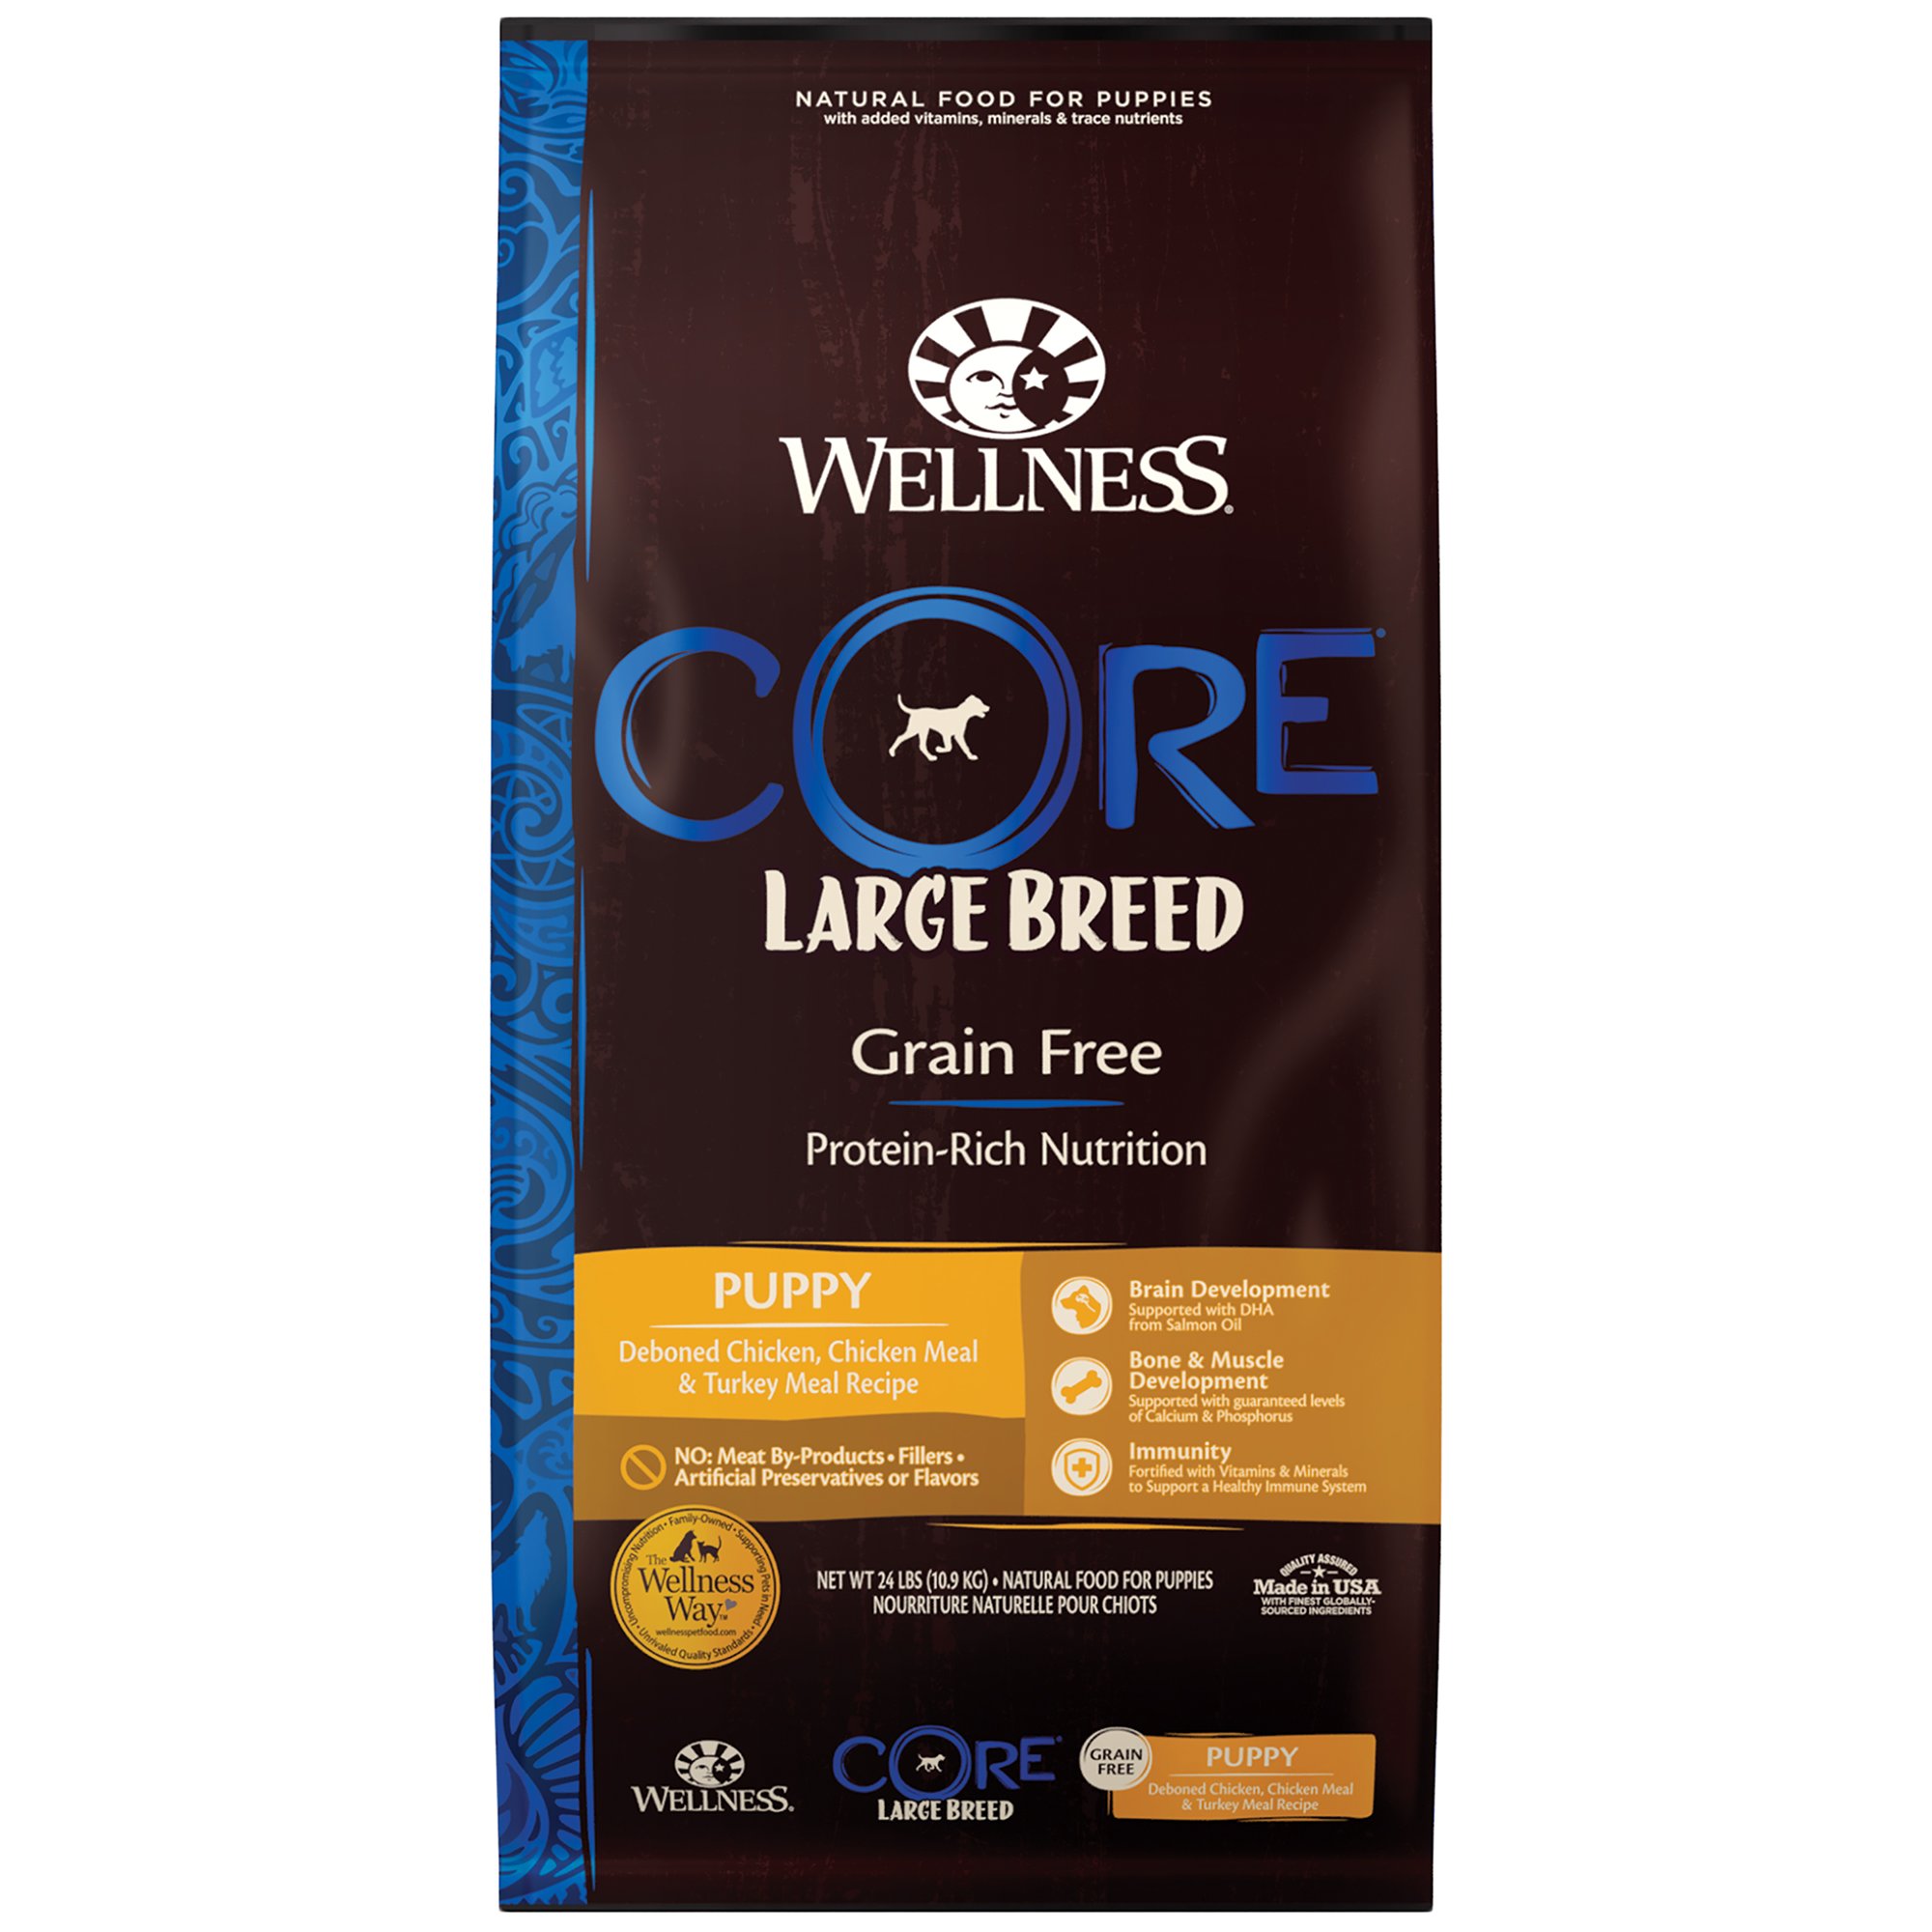 core wellness puppy food